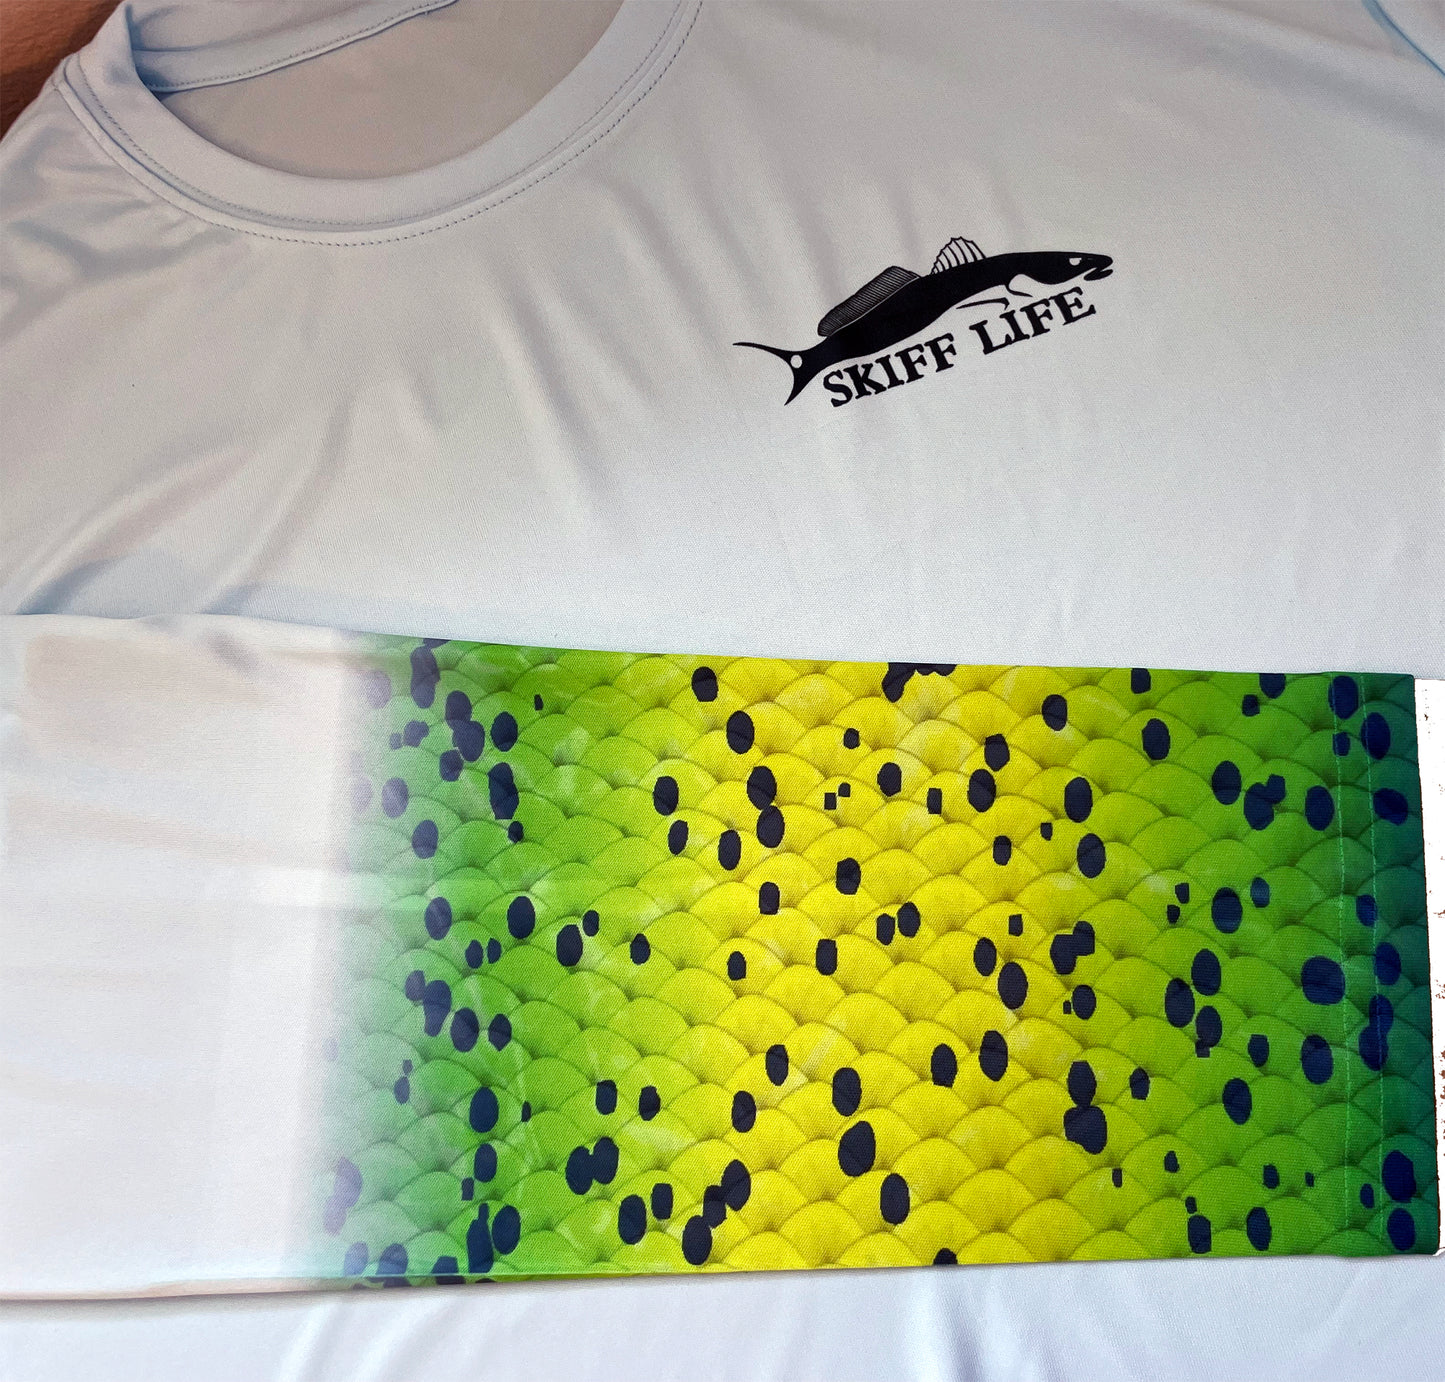 Mahi-mahi with Flying Fish Fishing Shirts for Men Featuring Dorado / Dolphinfish Art by Randy McGovern X-Large / Seagrass